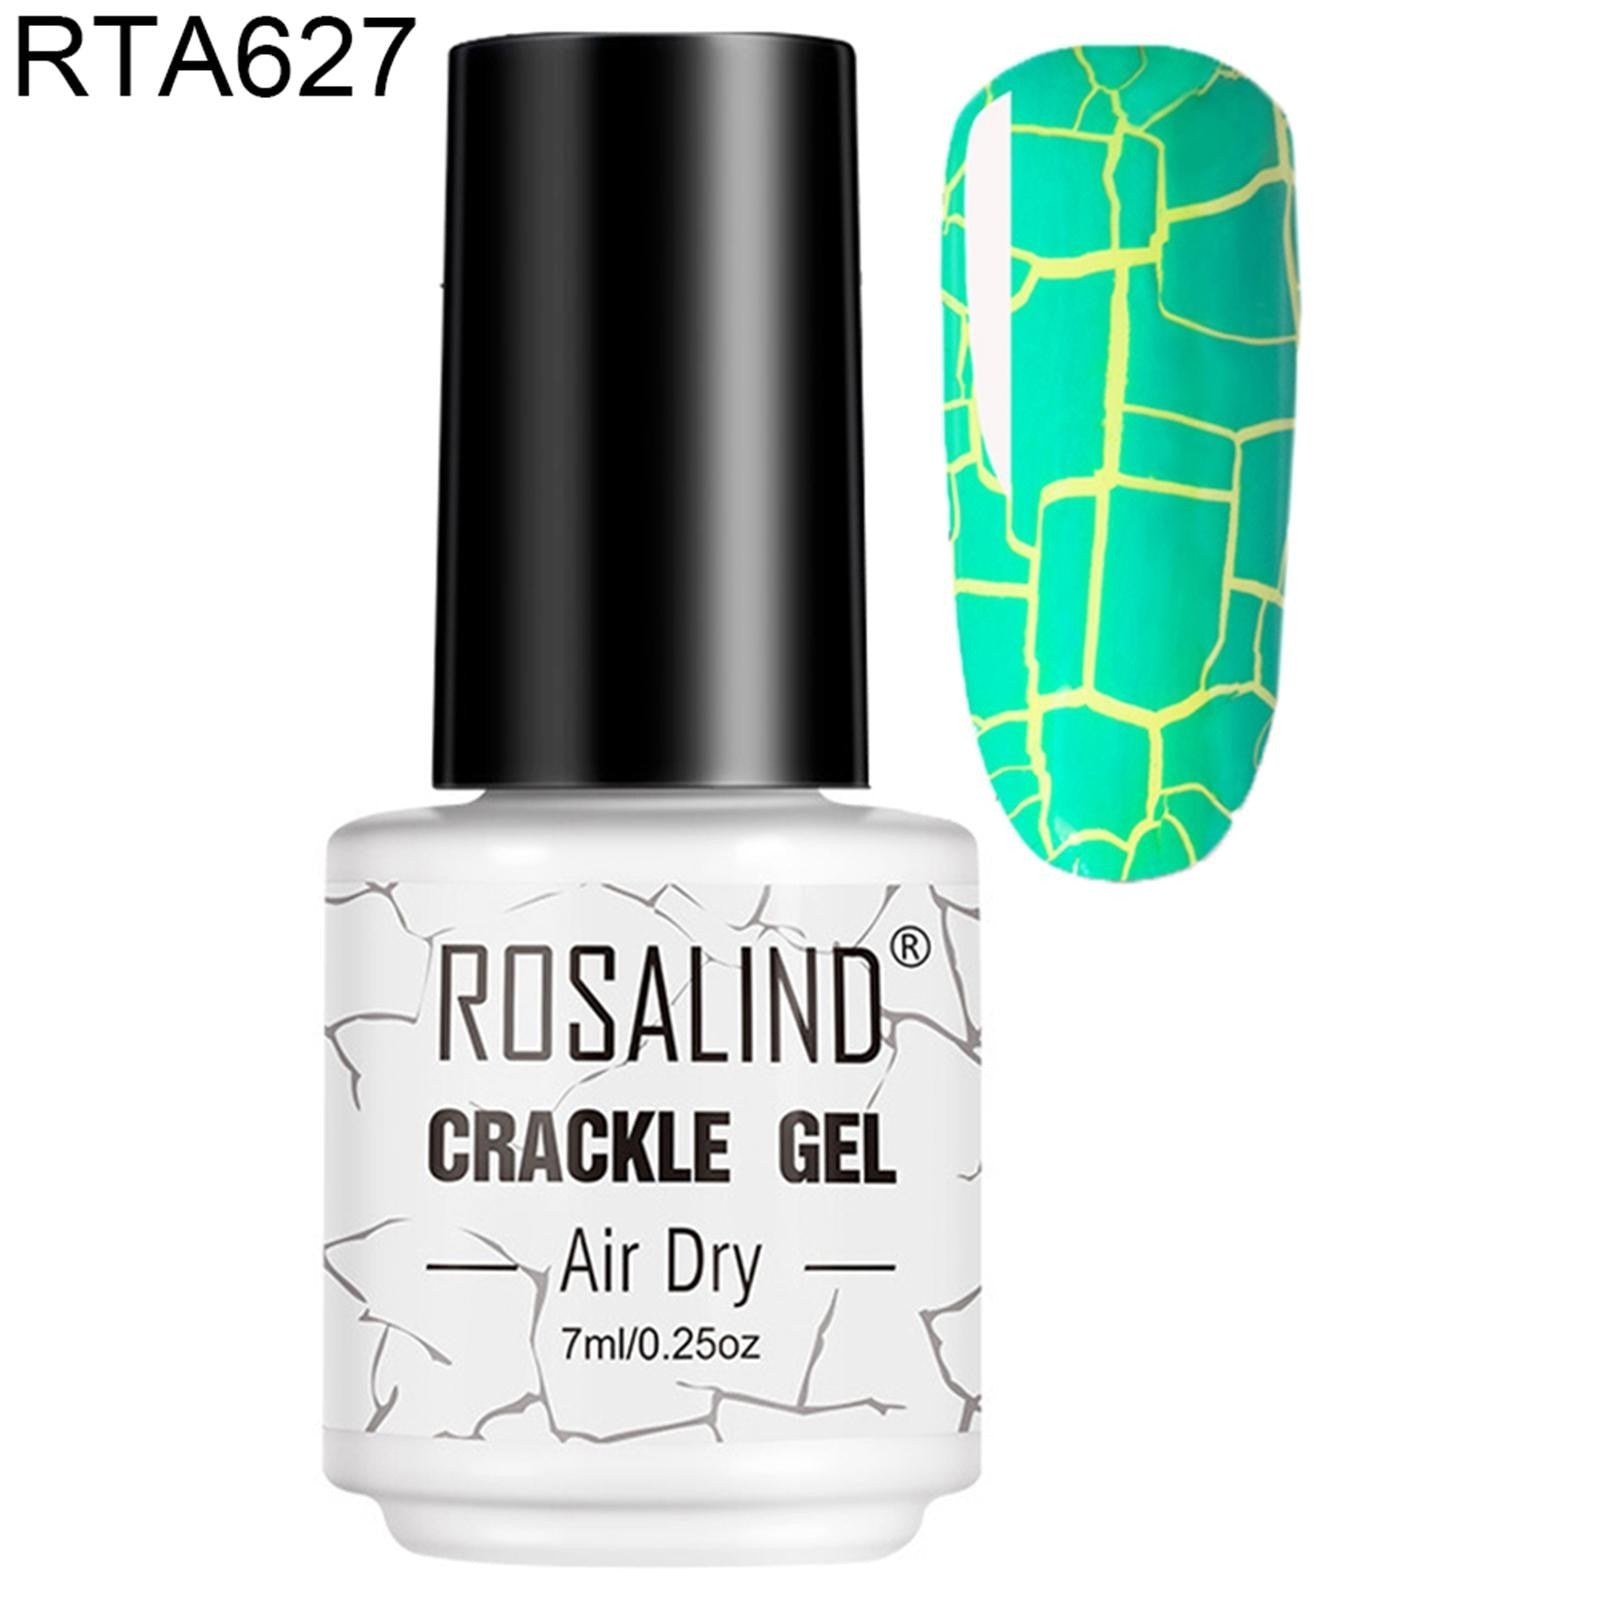 A627 - Rosalind ®